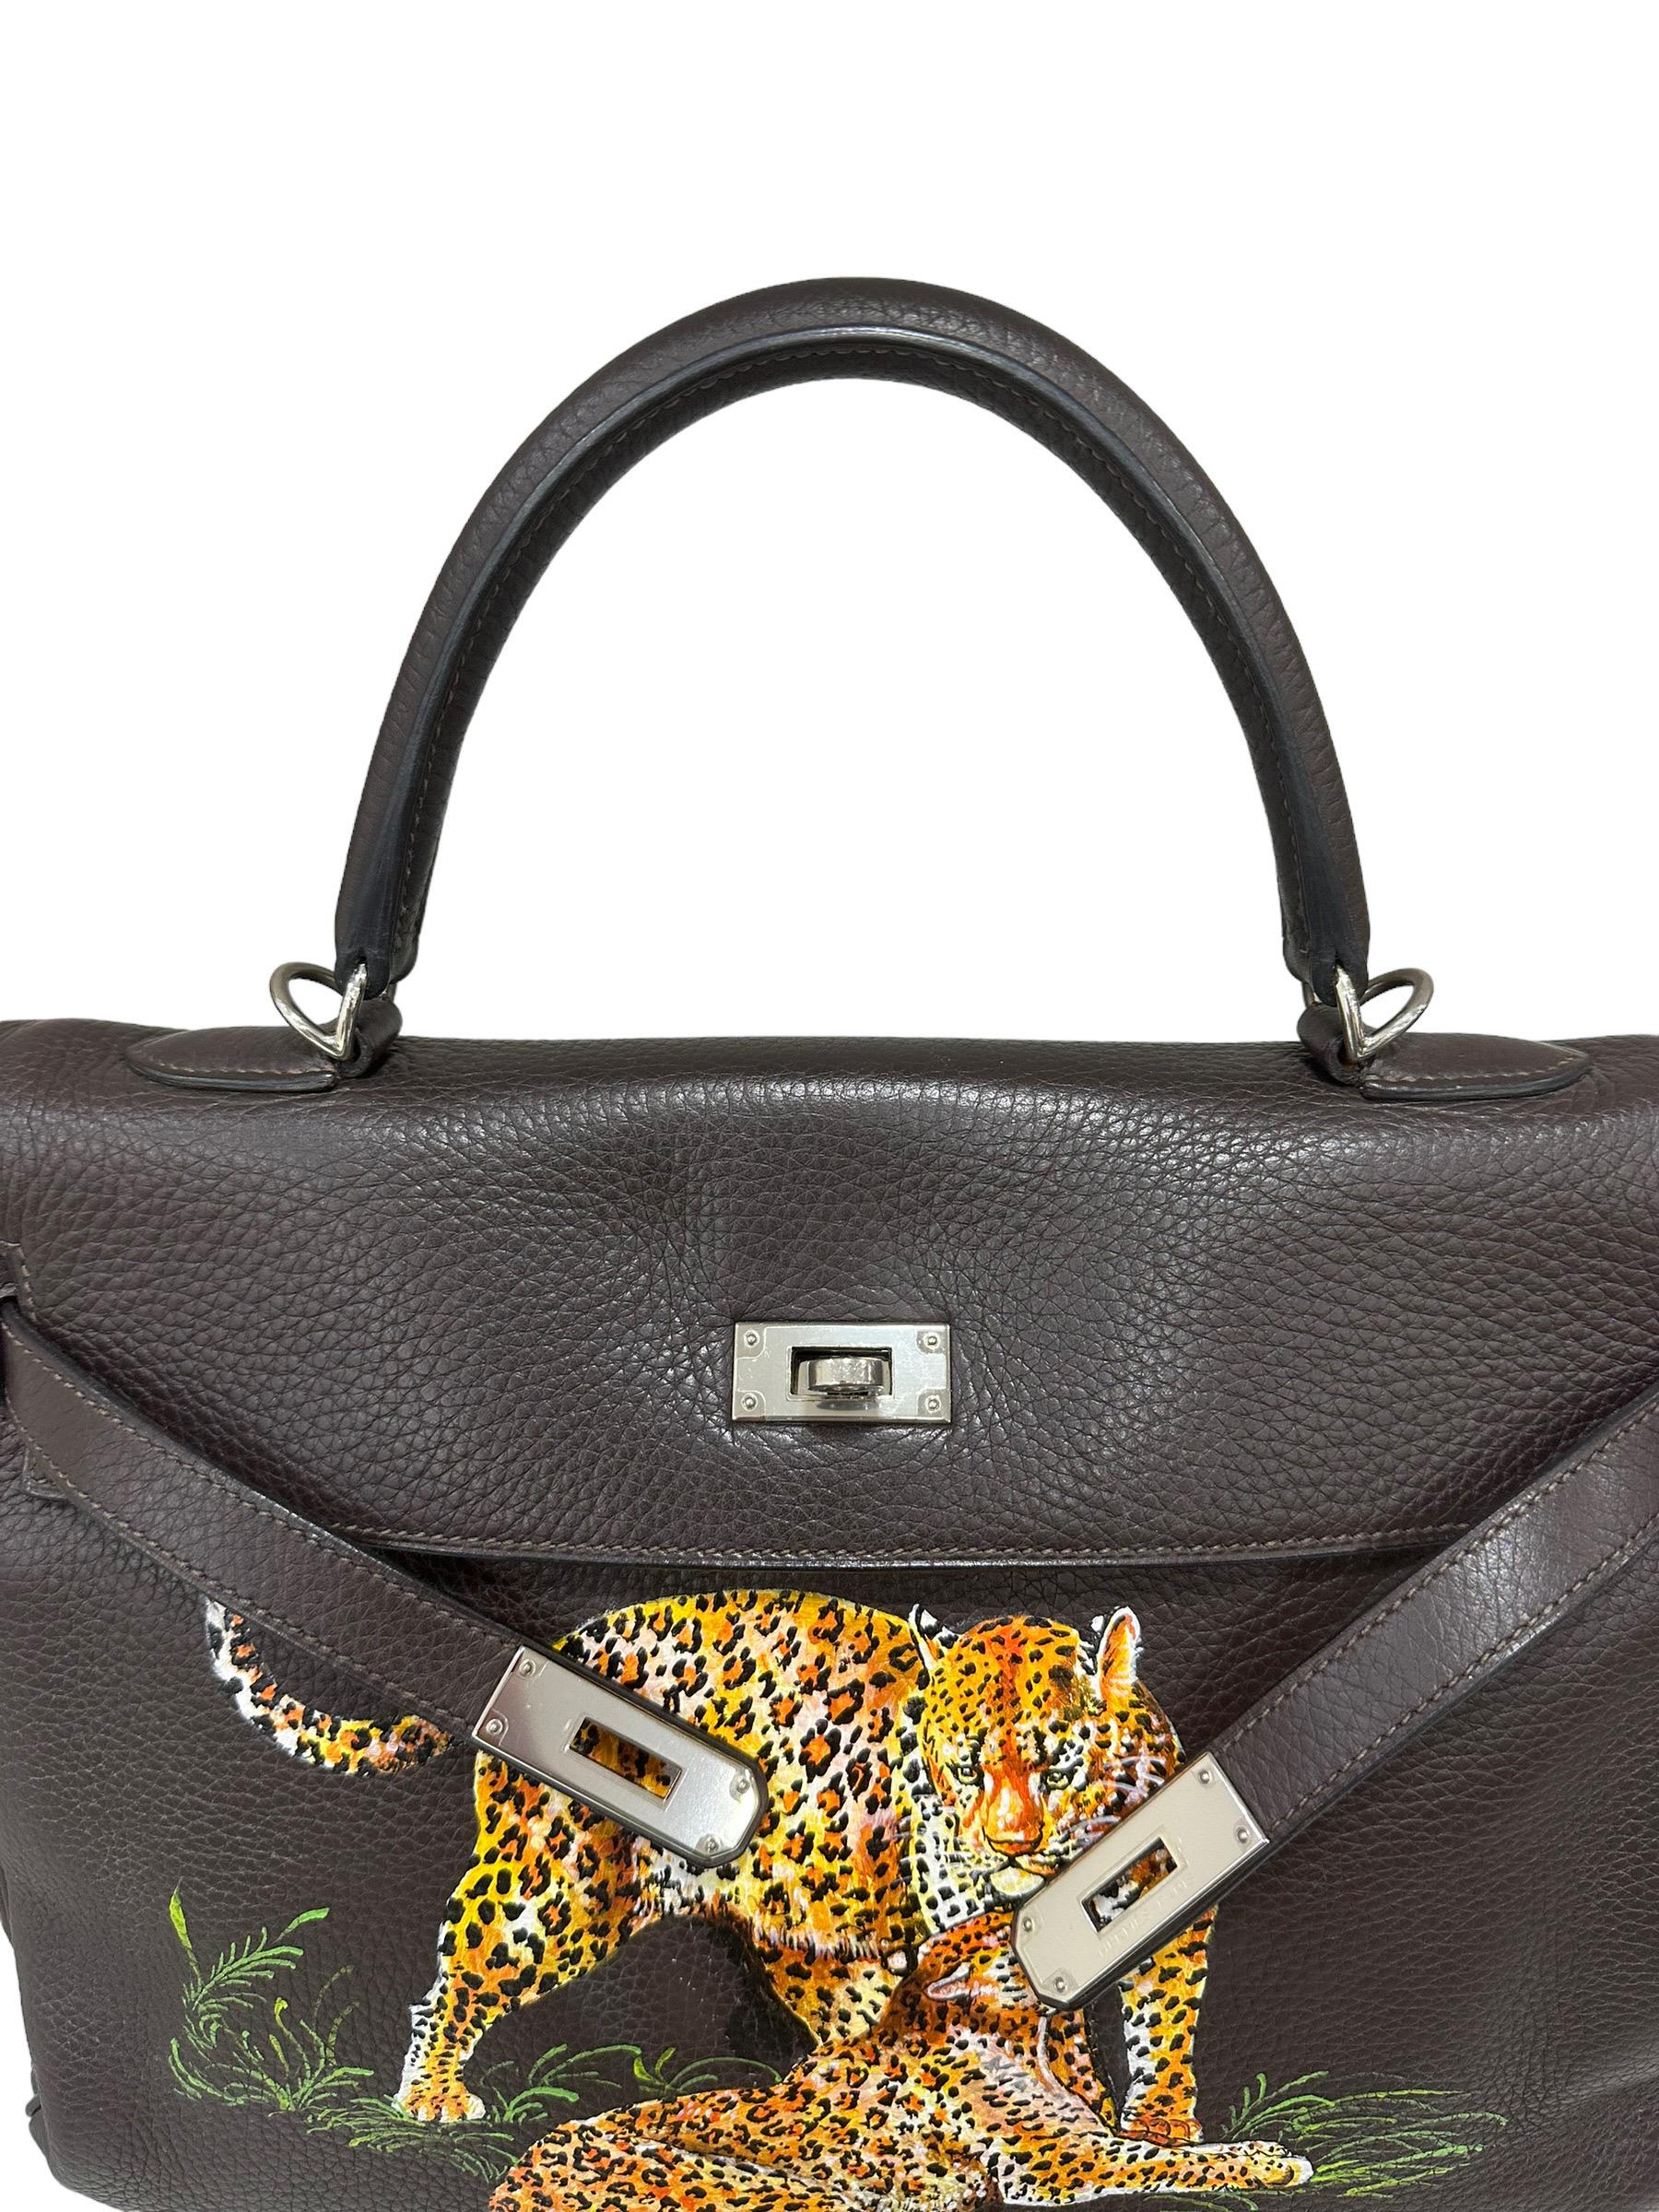 2006 Hermès Kelly 35 Clemence Ebene Leopard Top Handle Bag 12